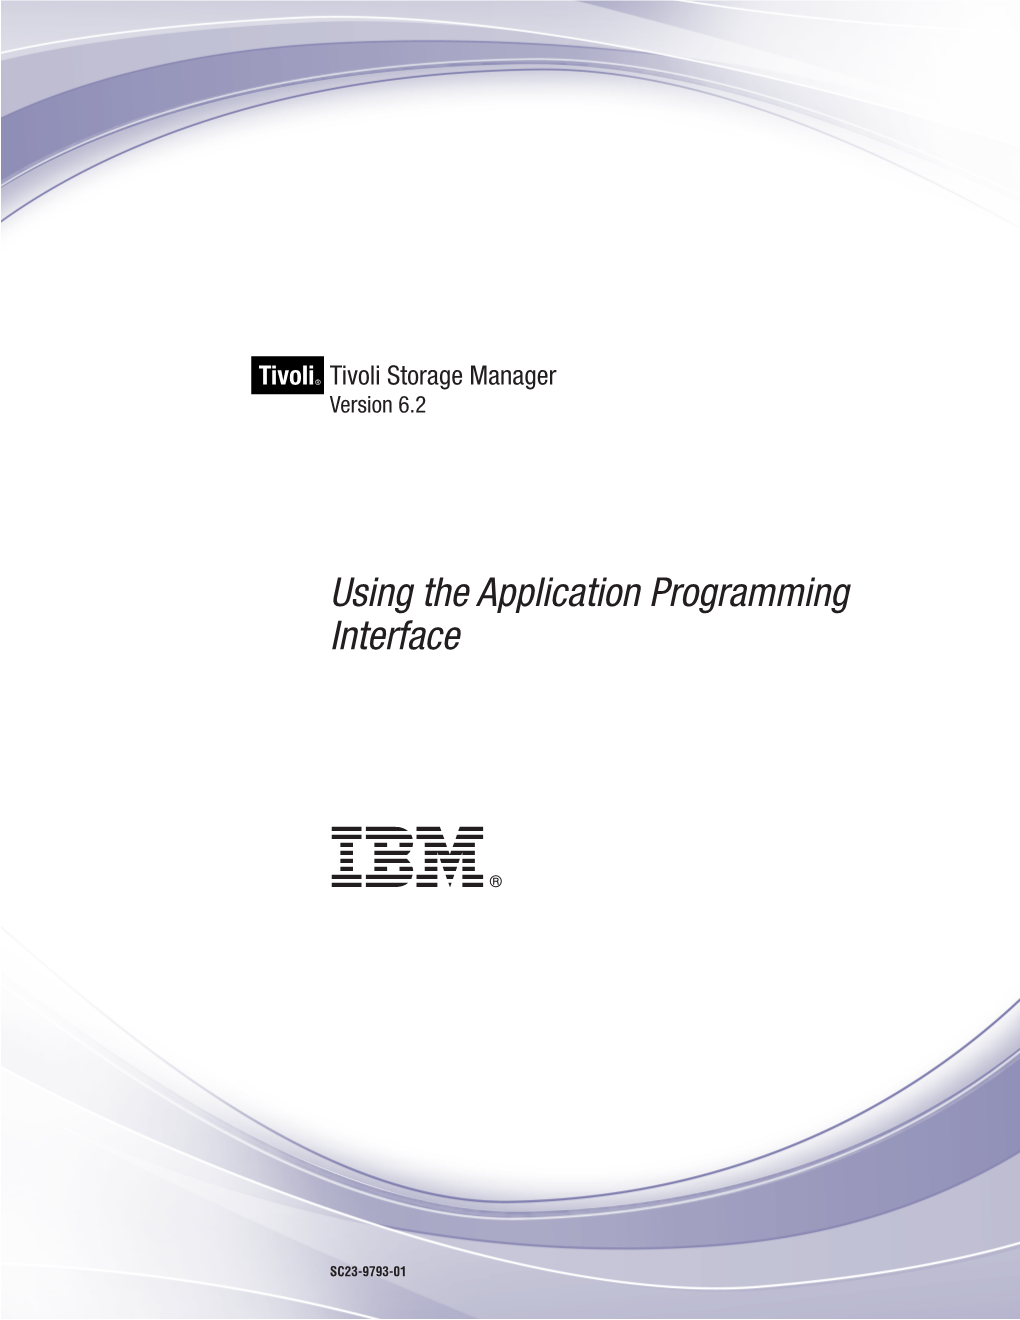 IBM Tivoli Tivoli Storage Manager: Using the Application Programming Interface Preface